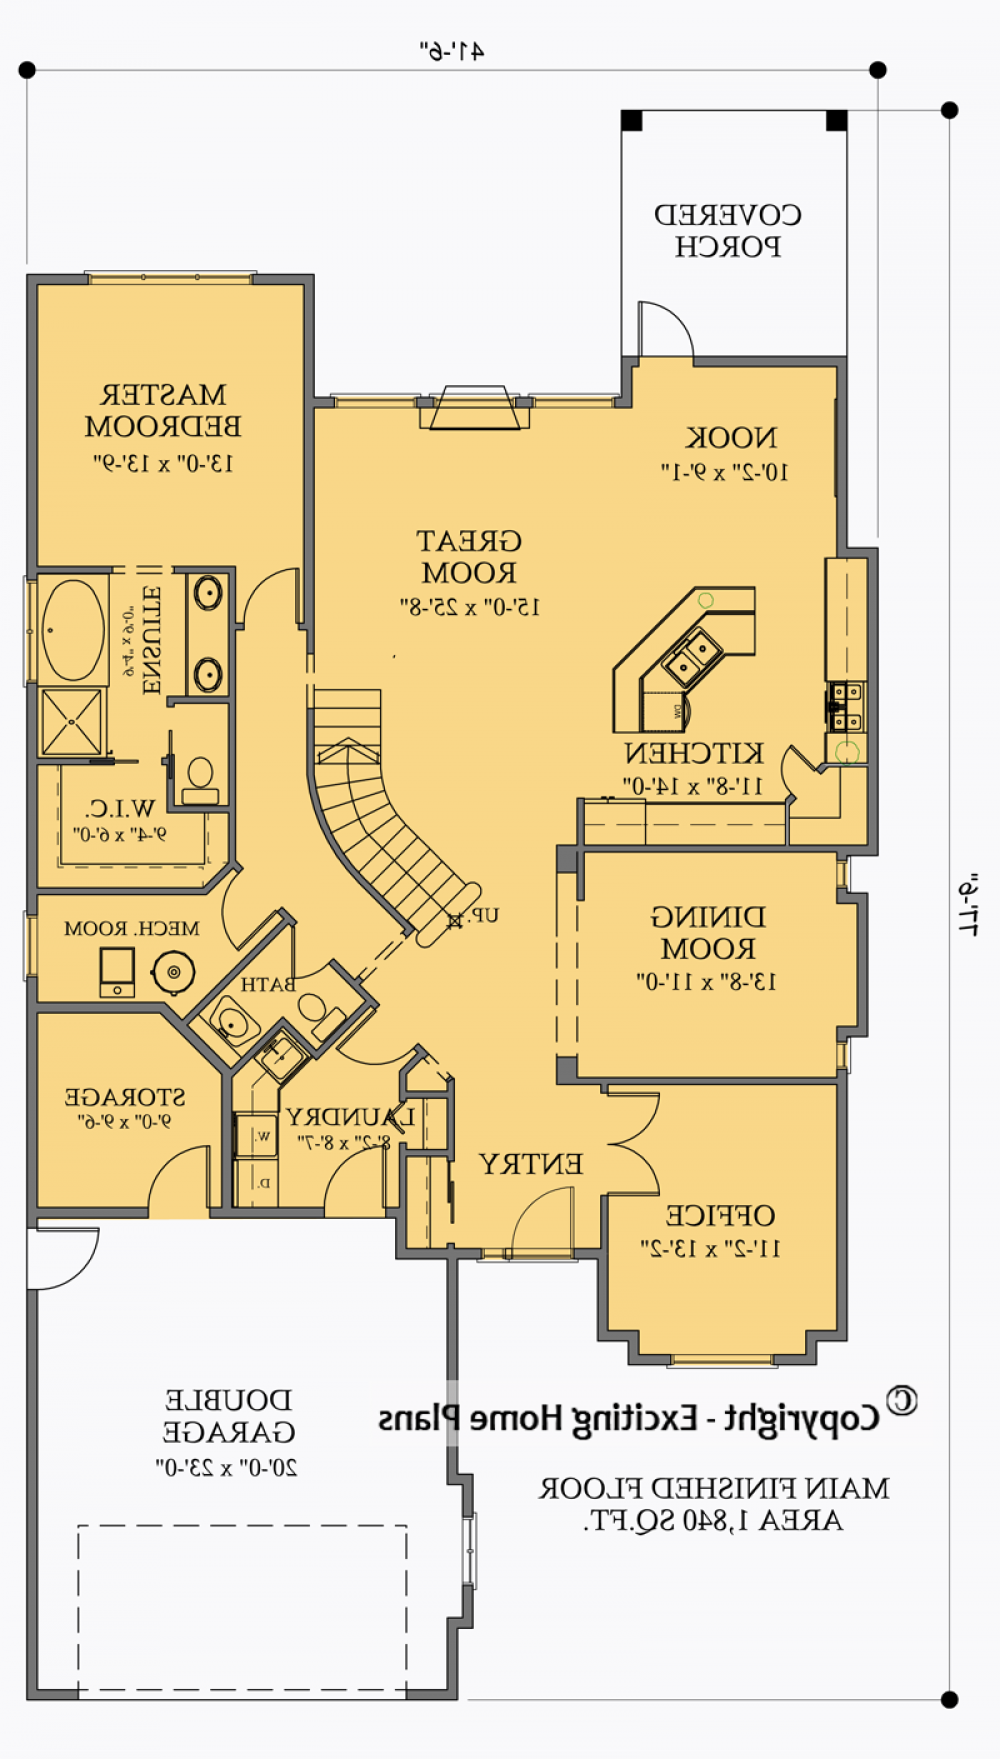 House Plan E1031-10 Main Floor Plan REVERSE